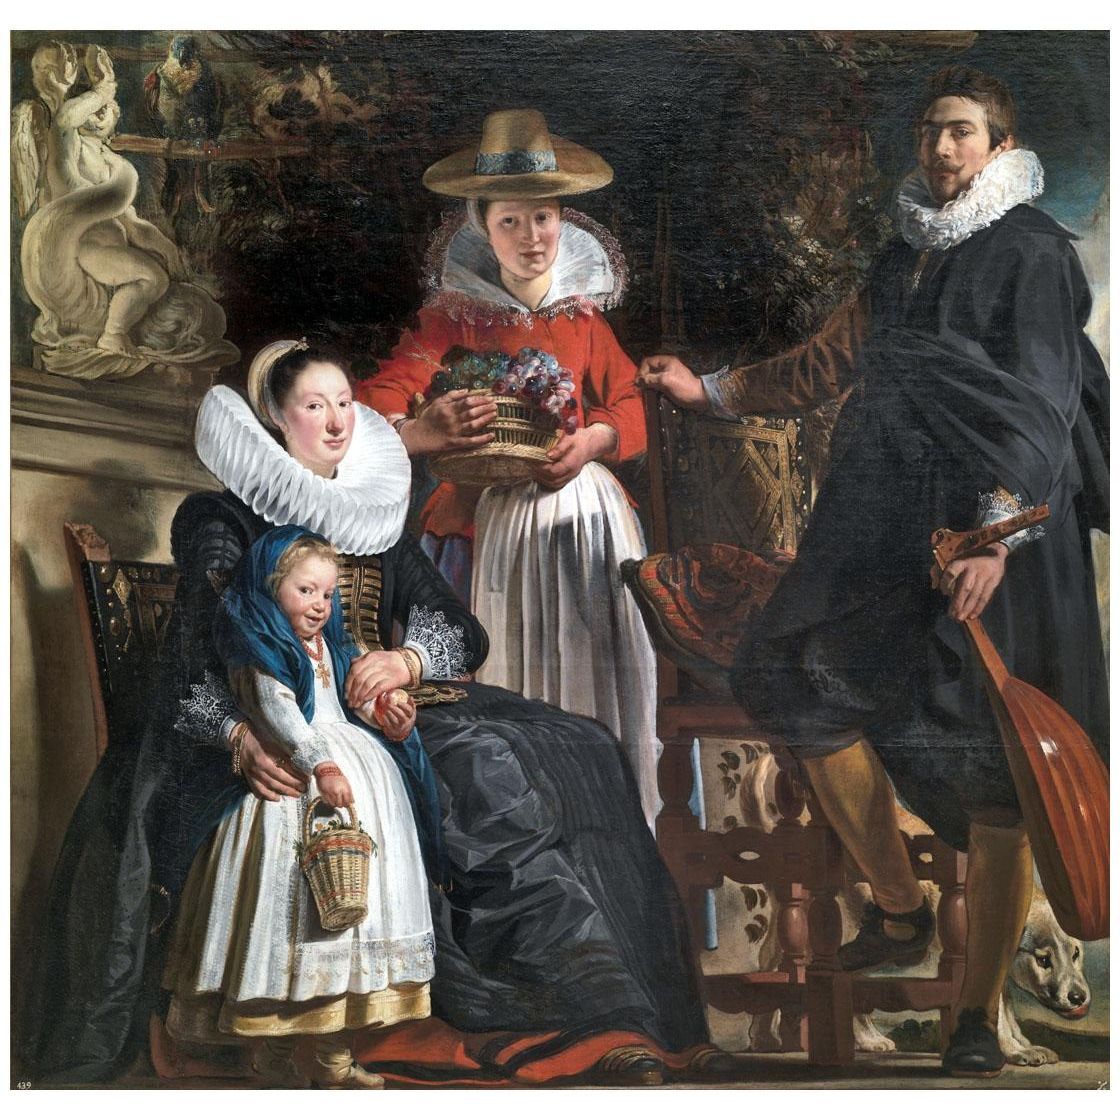 Jacob Jordaens. Portrait of the Artist with his Family. 1621. Museo del Prado Madrid